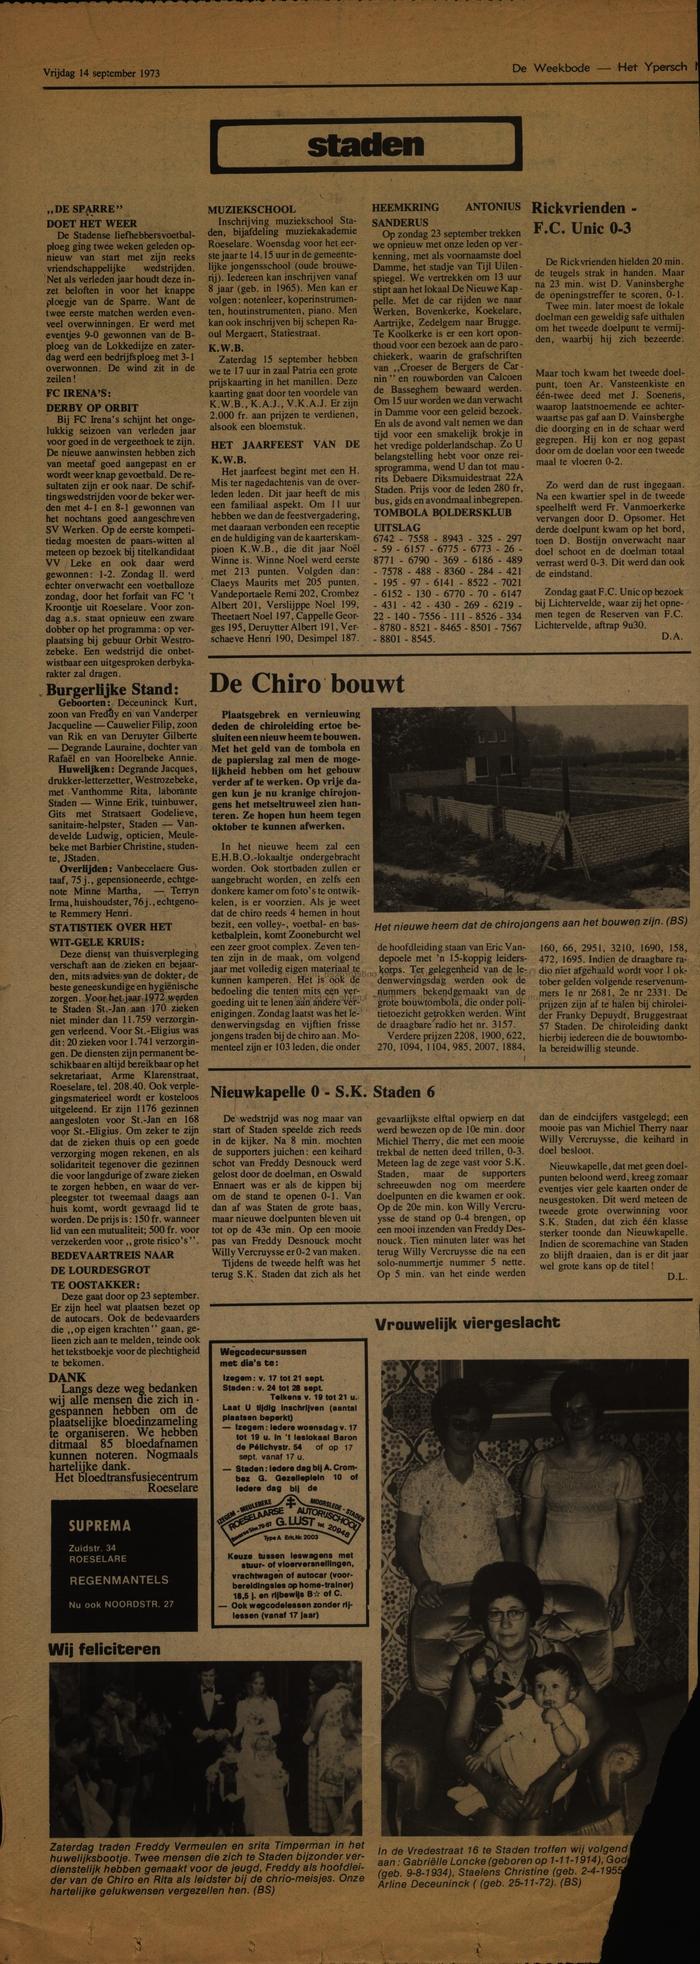 De Weekbode, 14 september 1973